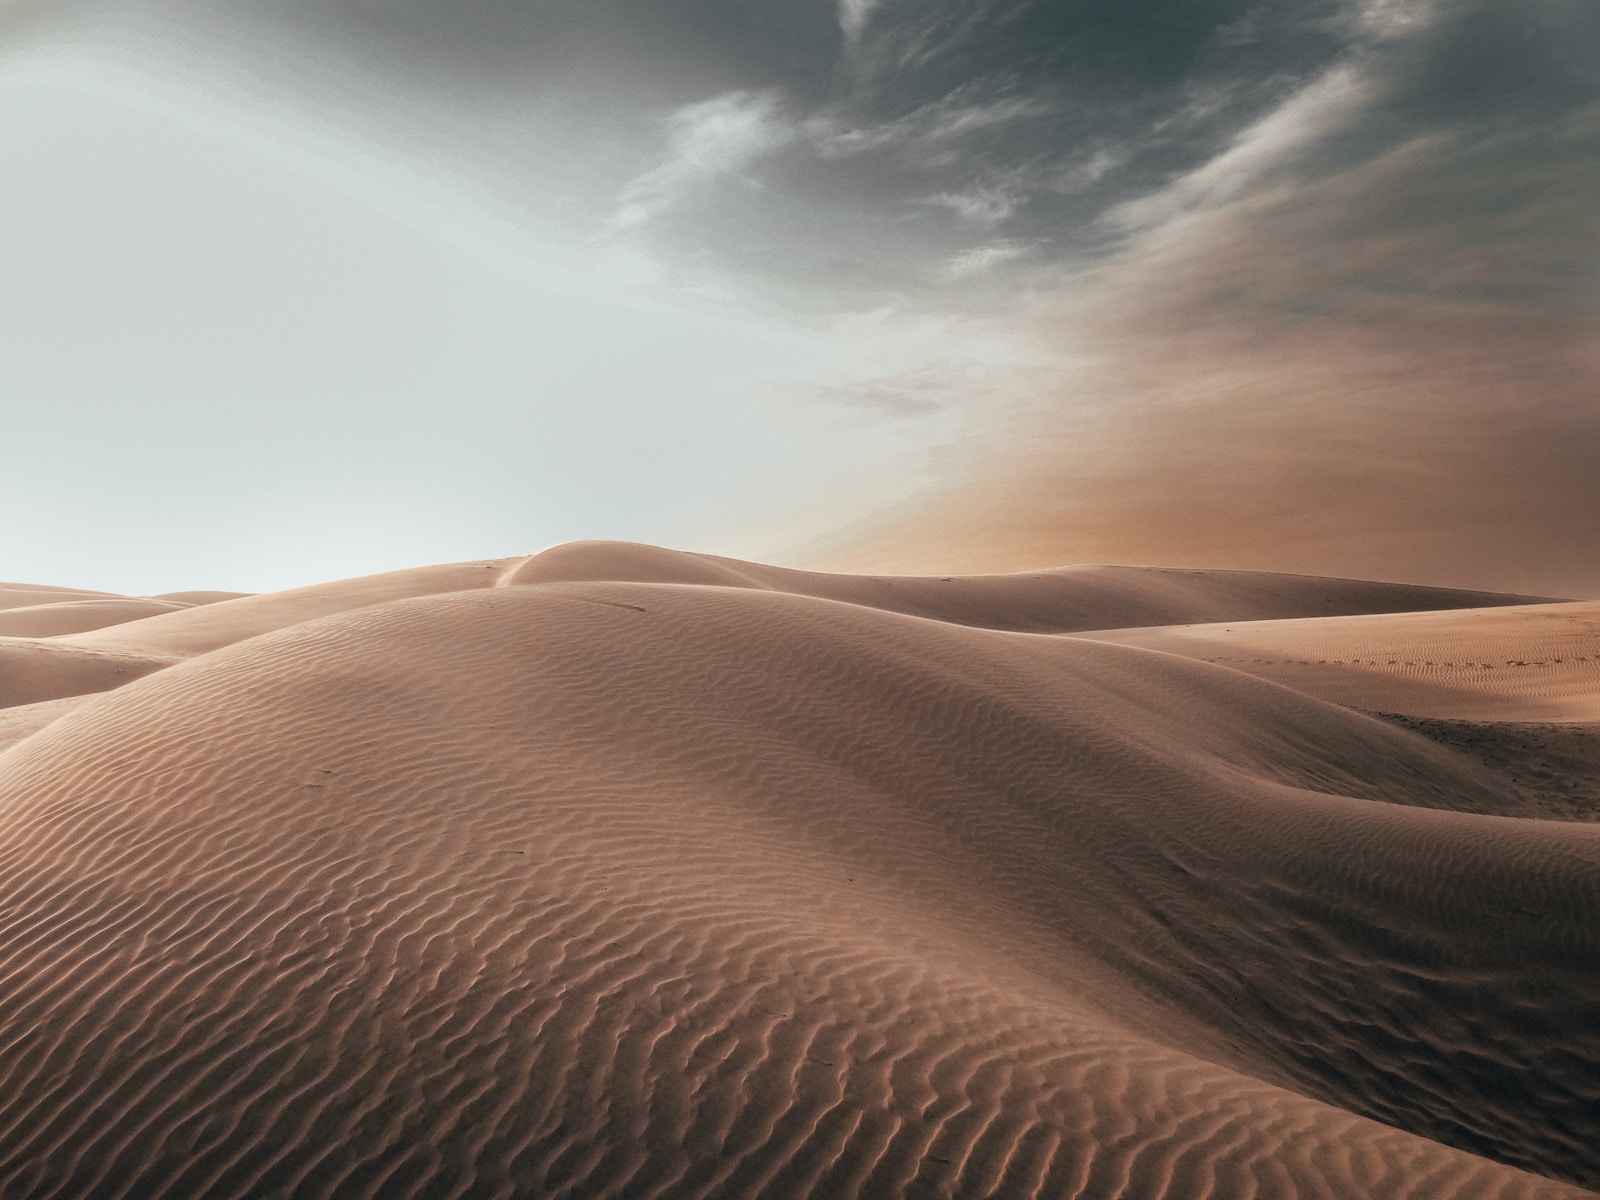 sand dunes at desert under grey cloudy sky